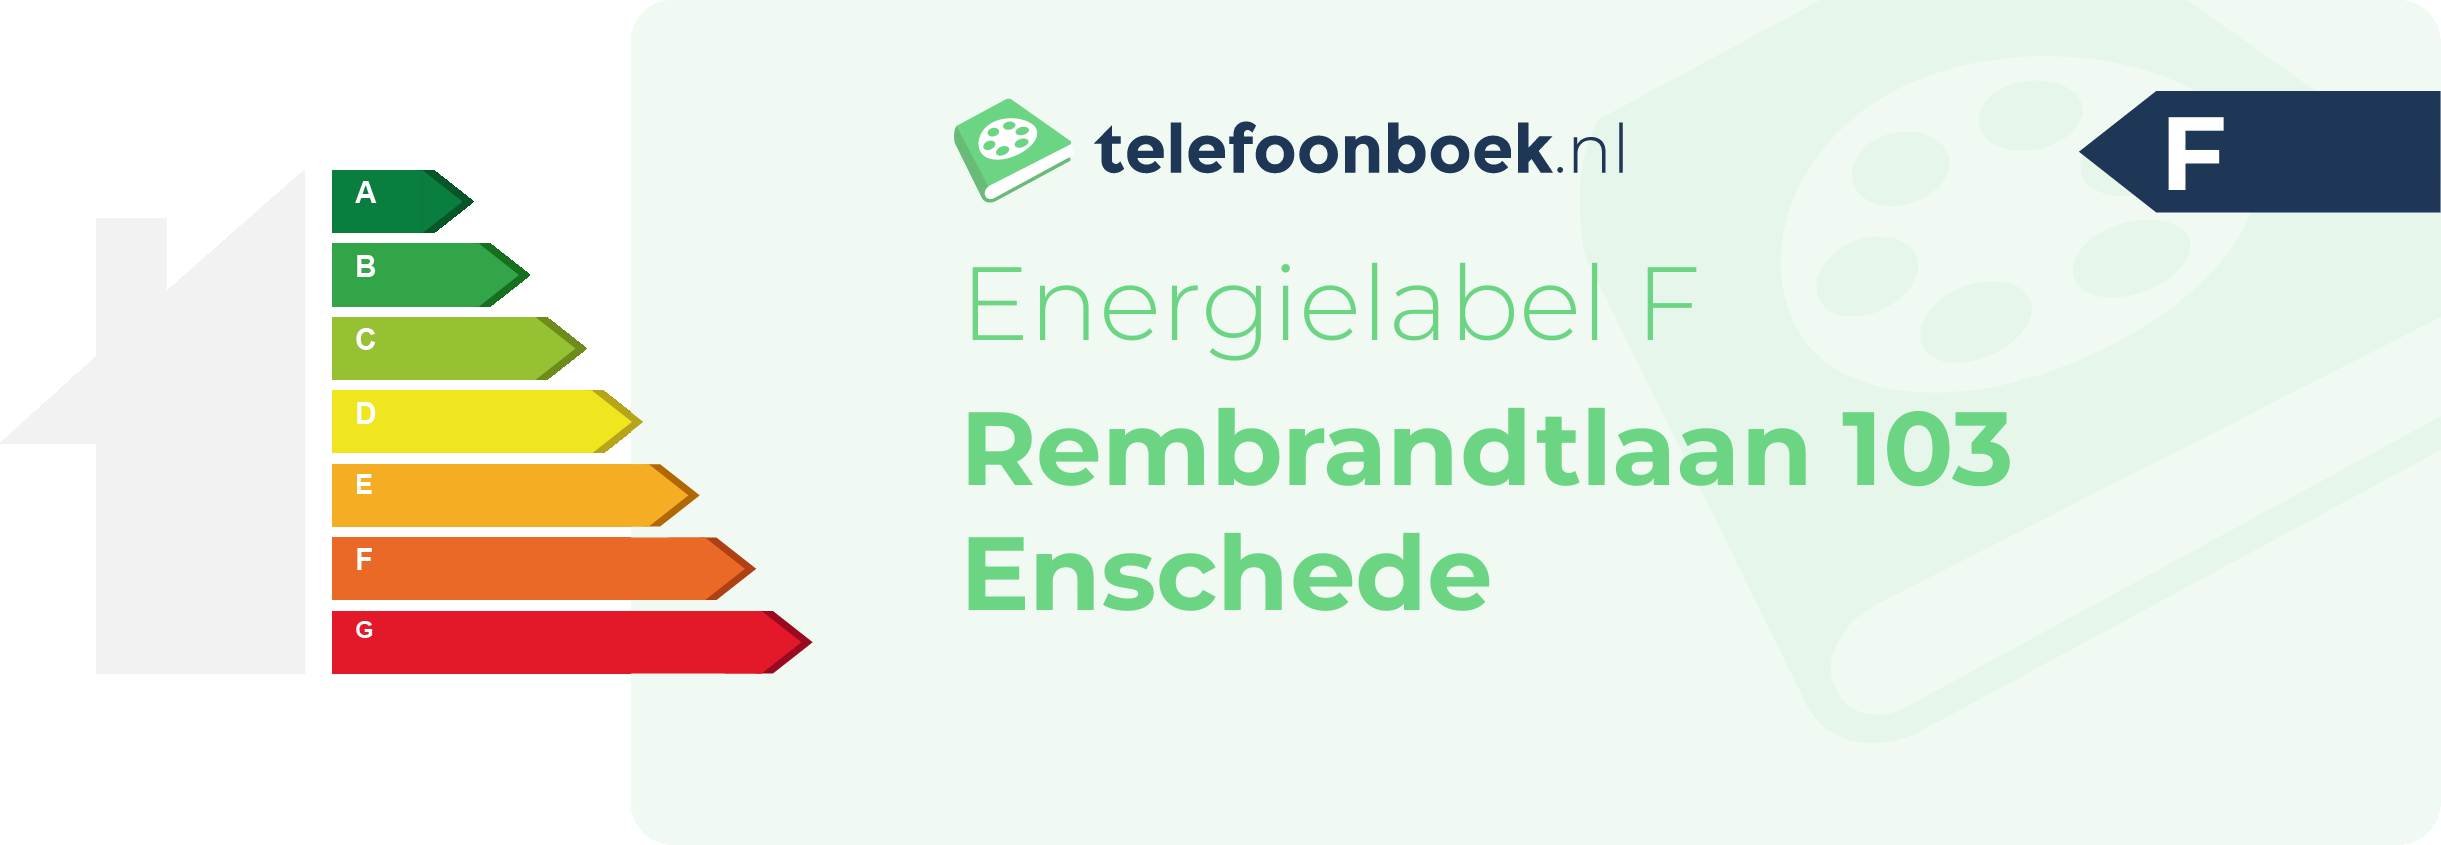 Energielabel Rembrandtlaan 103 Enschede